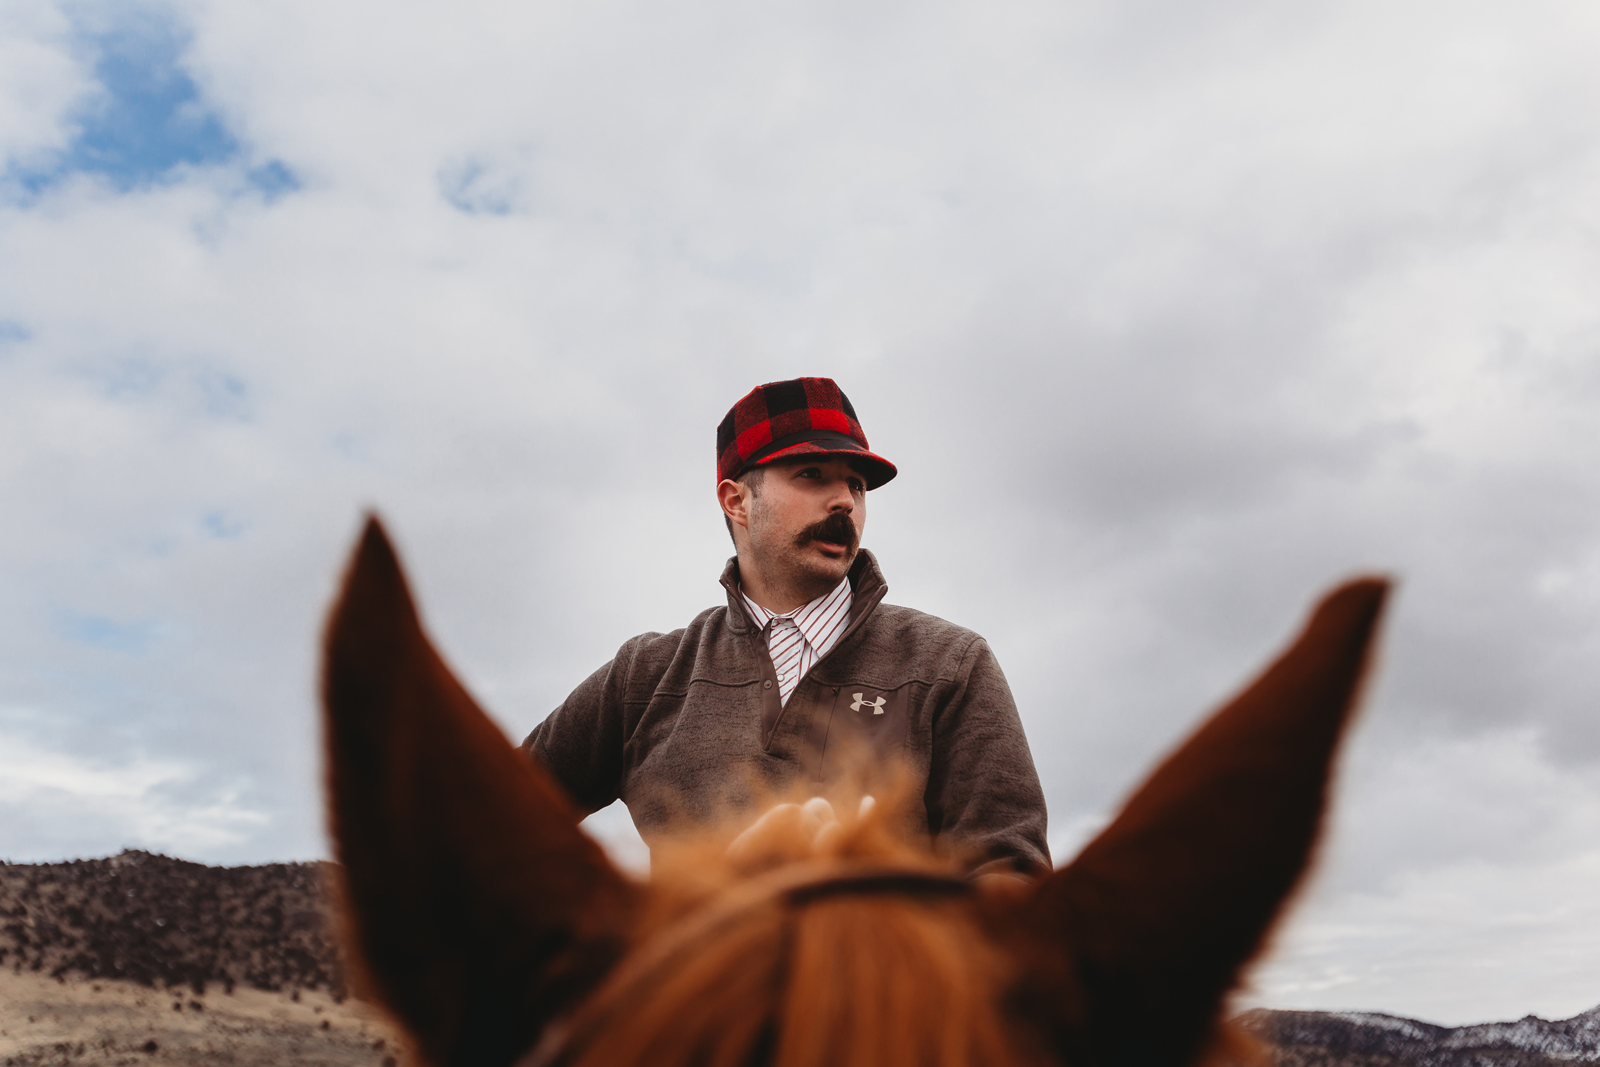 Laze L Farm Photography | CDPhotog Photography Workshop | Burns OR | cowboy riding his horse